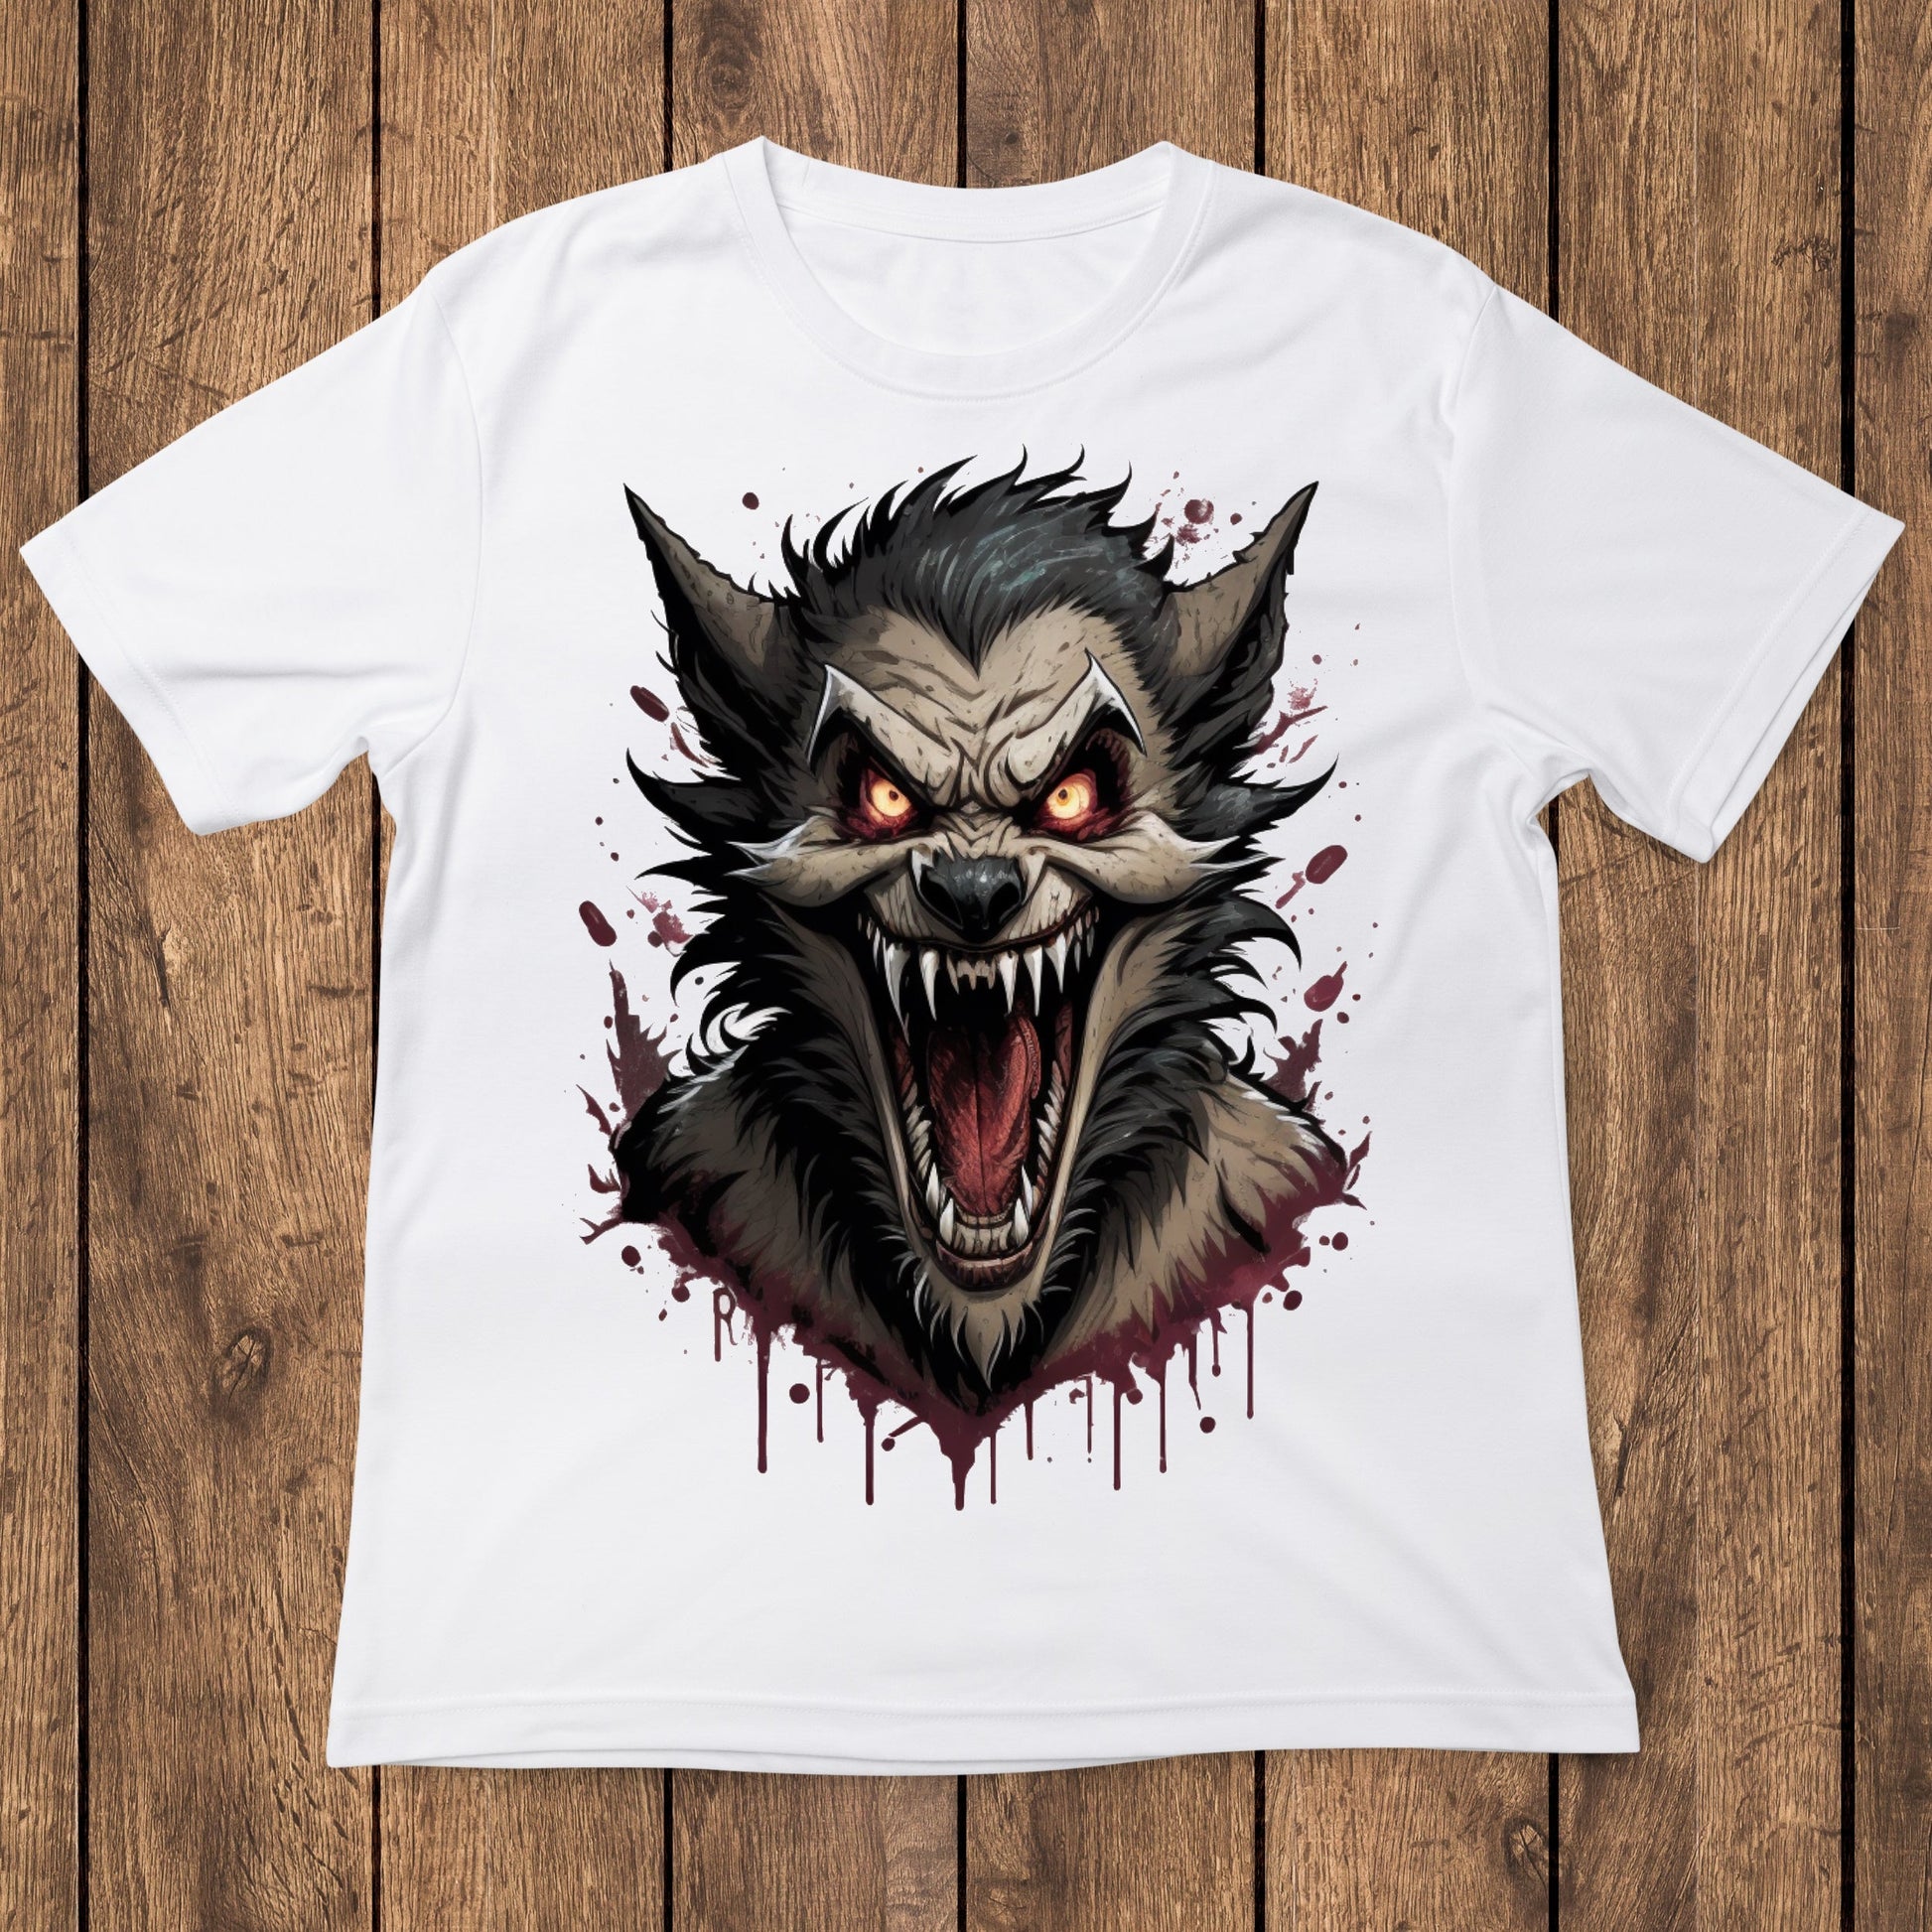 Werewolf splash art Halloween t-shirt - Premium t-shirt from Lees Krazy Teez - Just $24.95! Shop now at Lees Krazy Teez